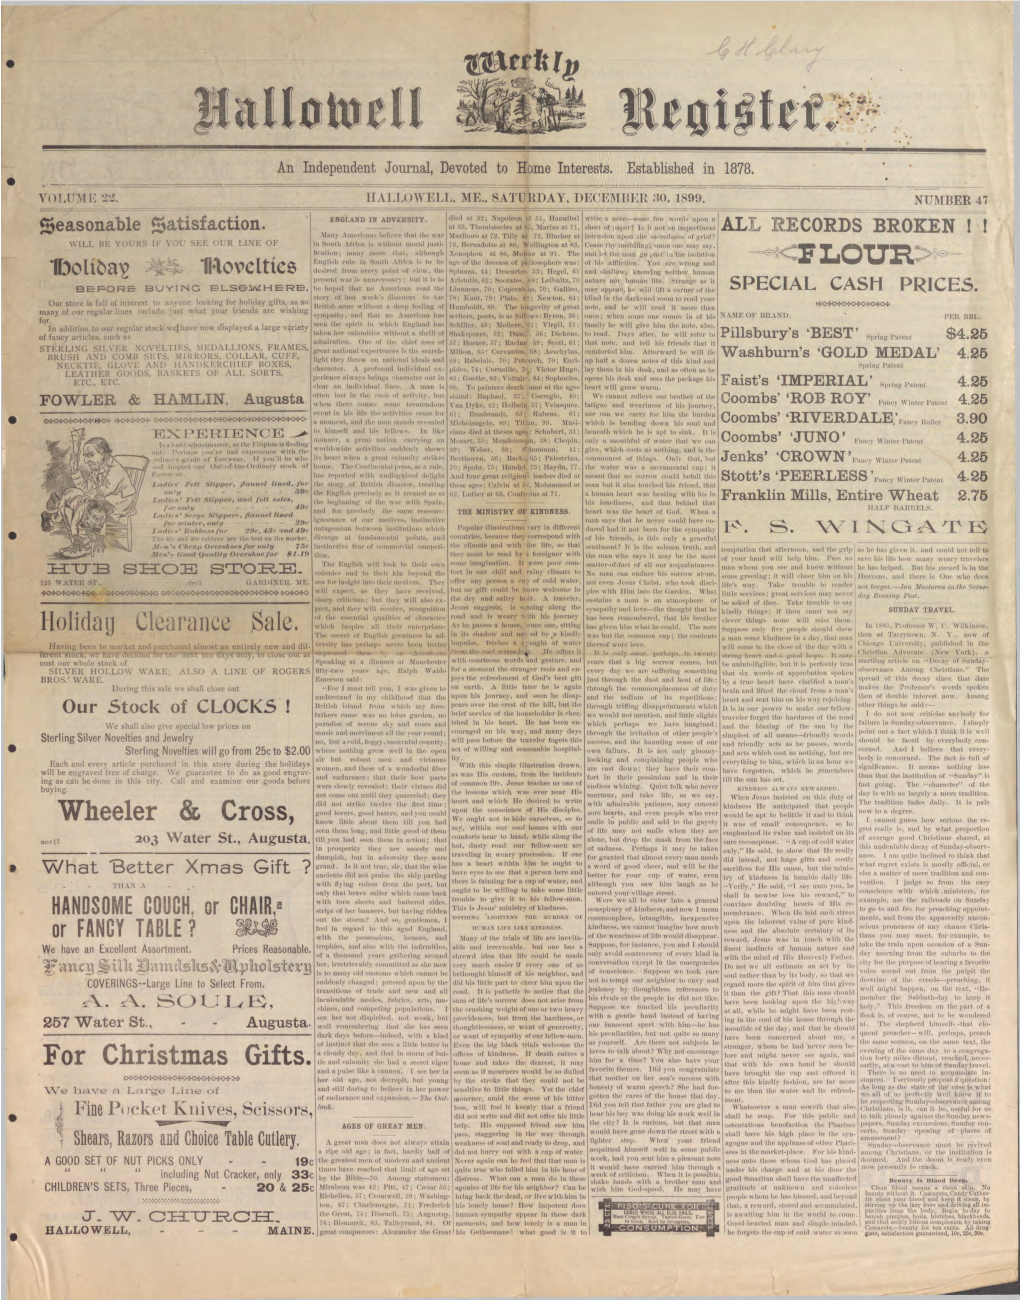 Hallowell Weekly Register : December 30, 1899